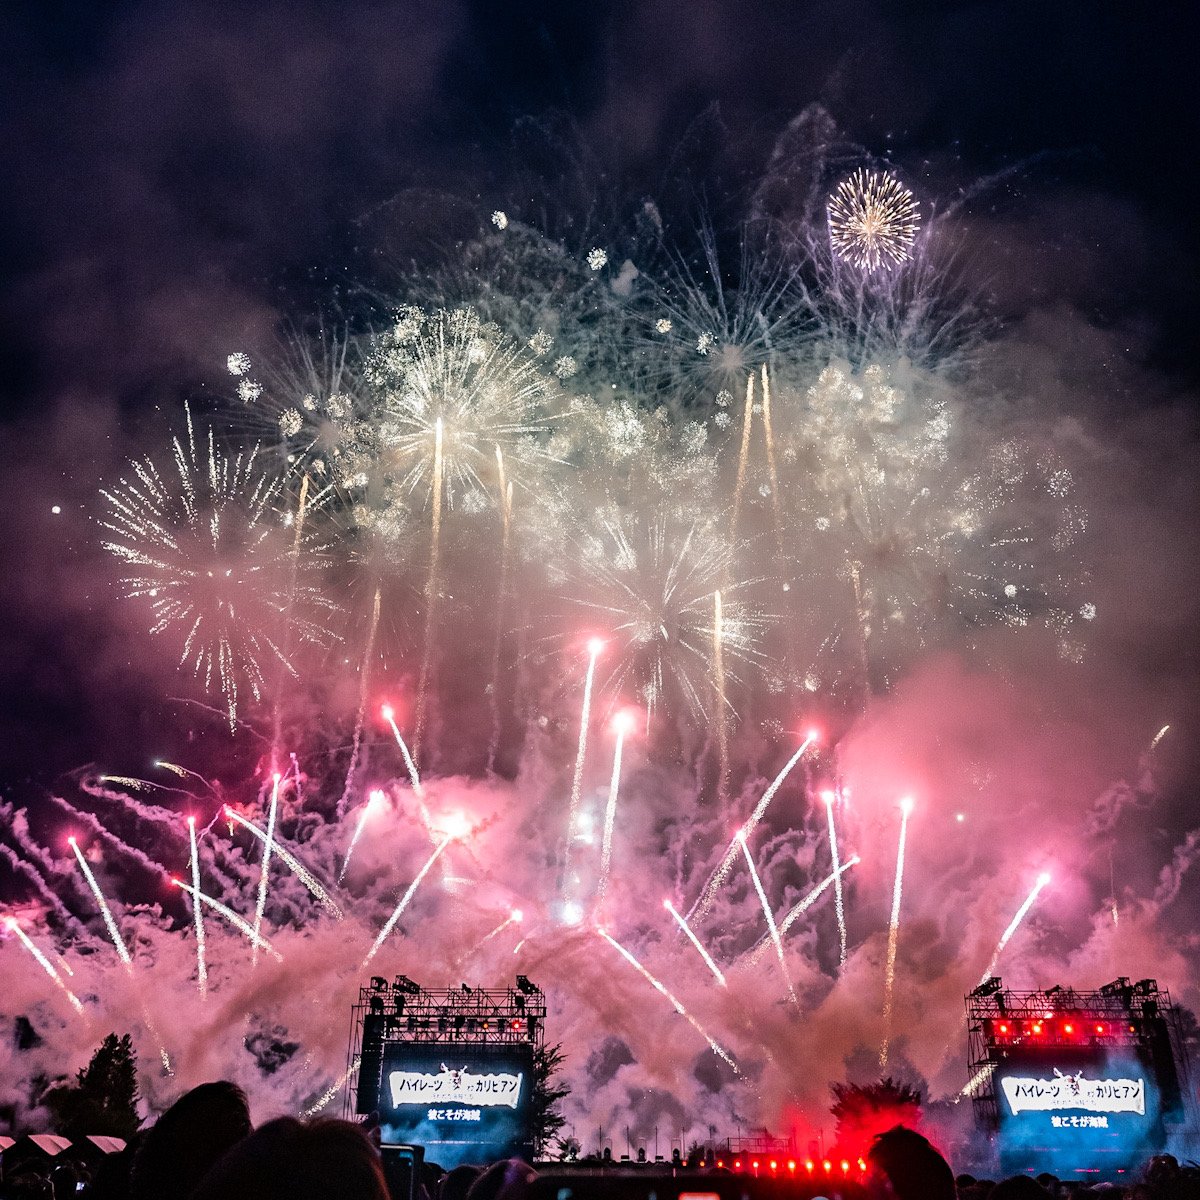 「Disney Music & Fireworks」山中湖公演 レポート